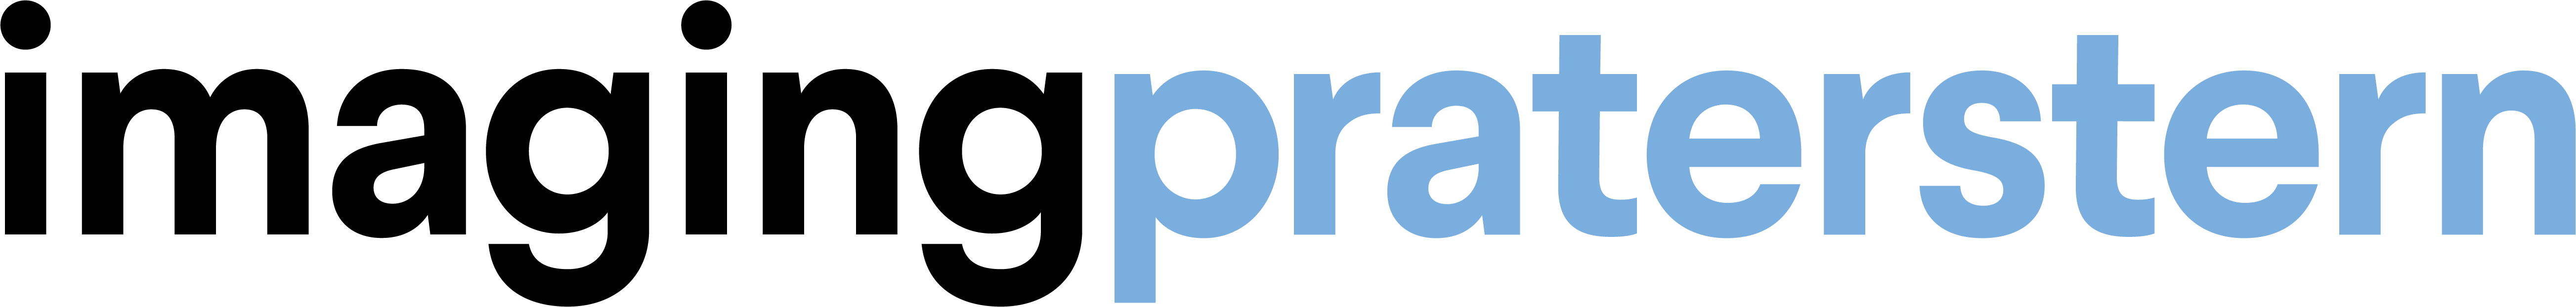 Logo Imaging Praterstern 2020 Pantone284 U